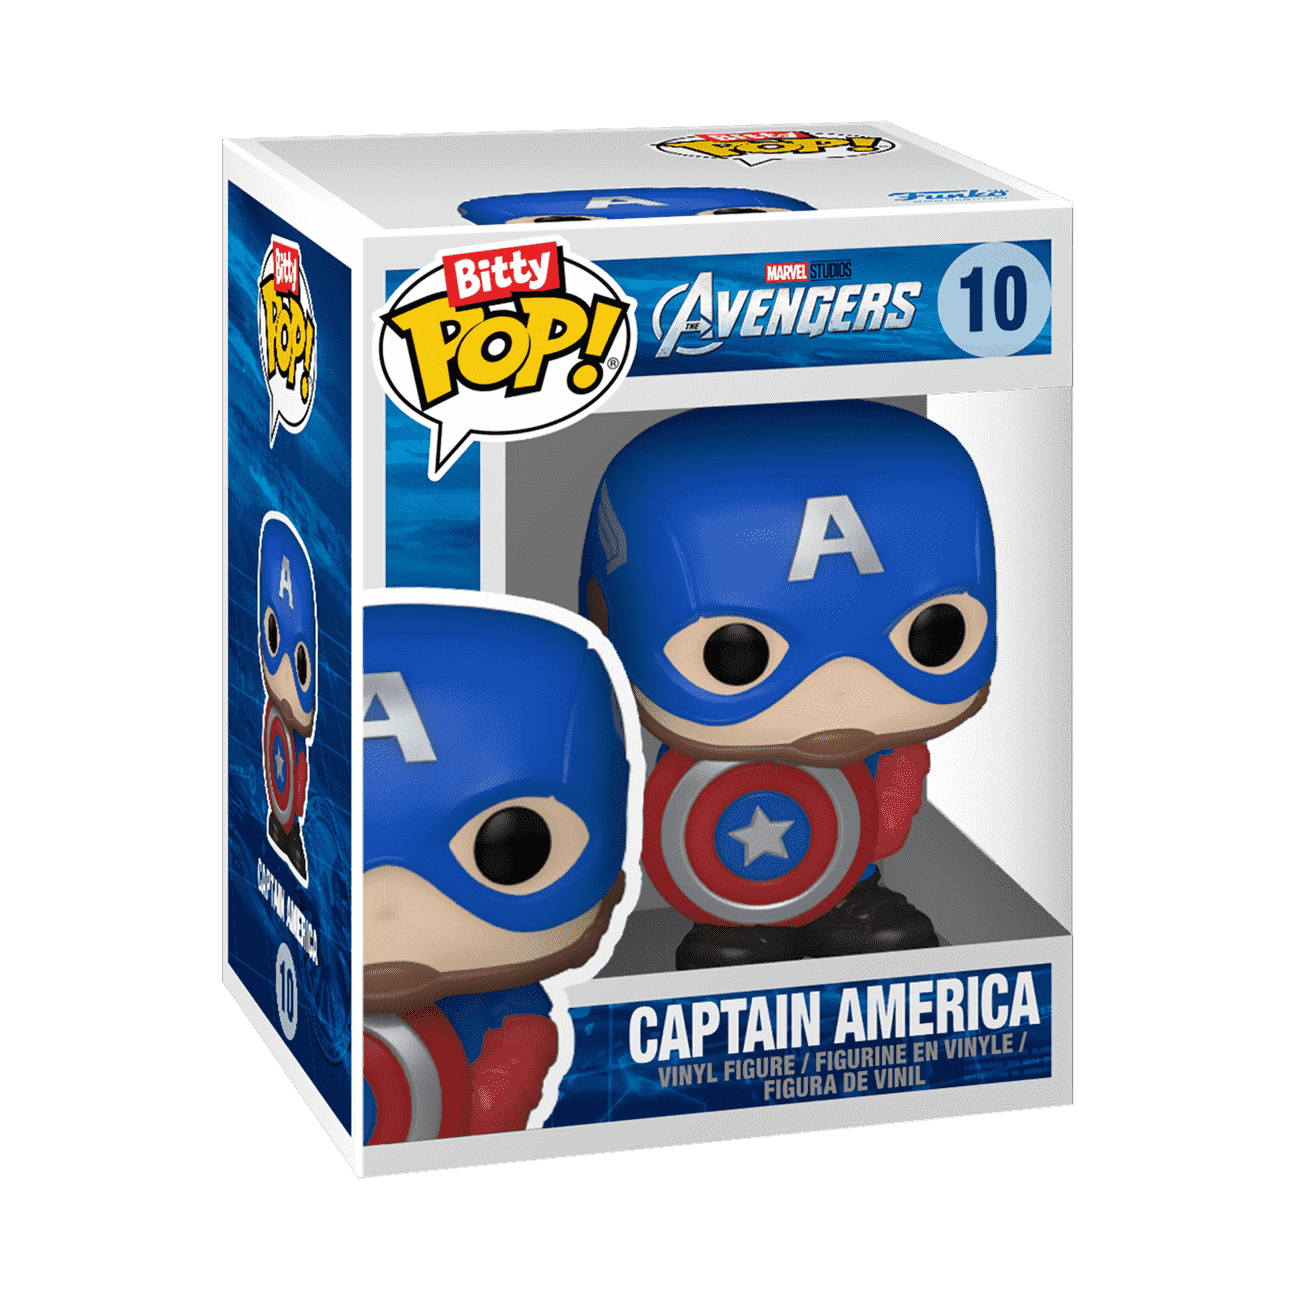 Buy Bitty Pop! Marvel the Infinity Saga Captain America at Funko.